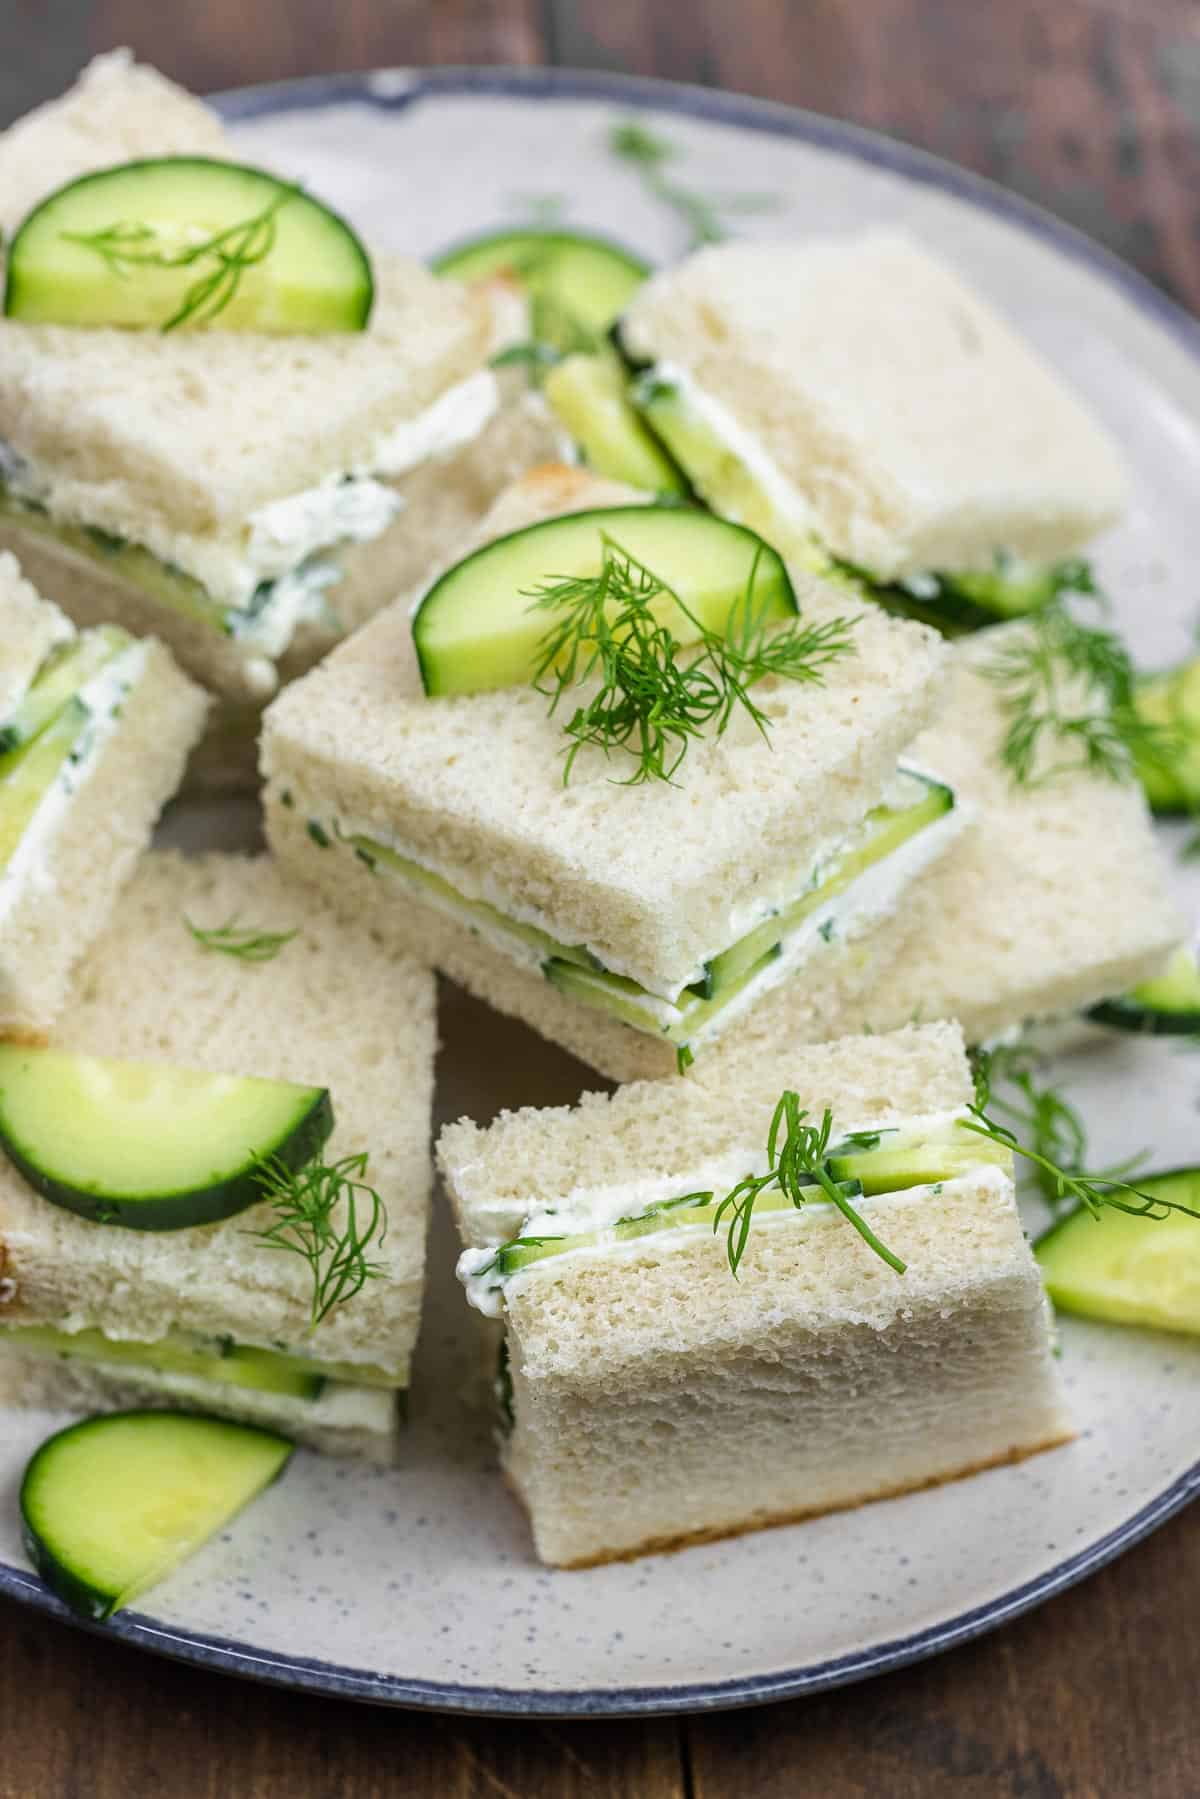 https://www.themediterraneandish.com/wp-content/uploads/2022/07/cucumber-sandwich-recipe-1.jpg